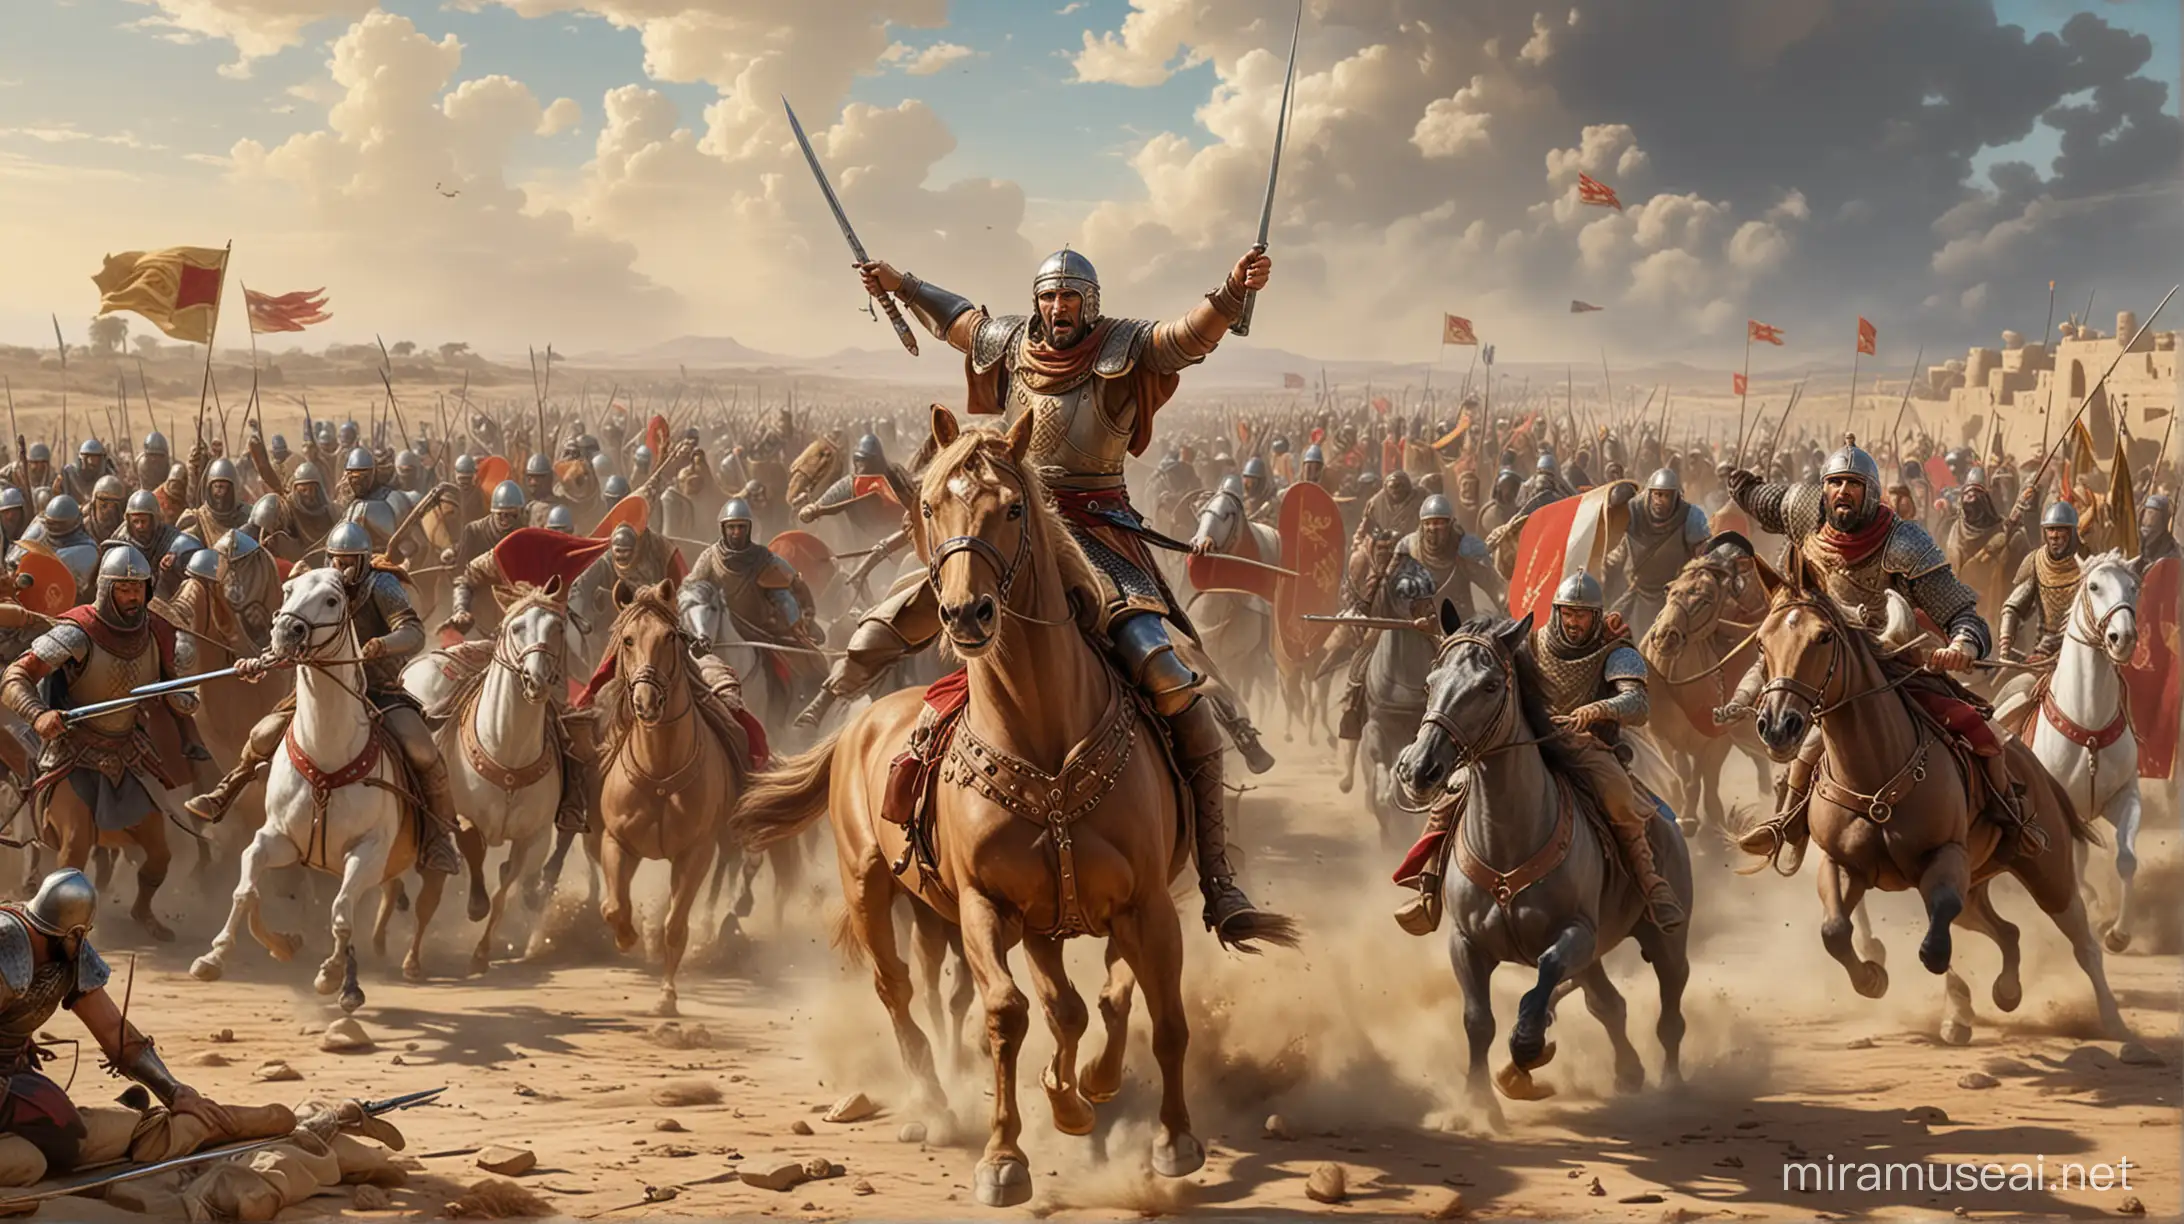 Medieval King Richard the Lionheart Battling Arab Army